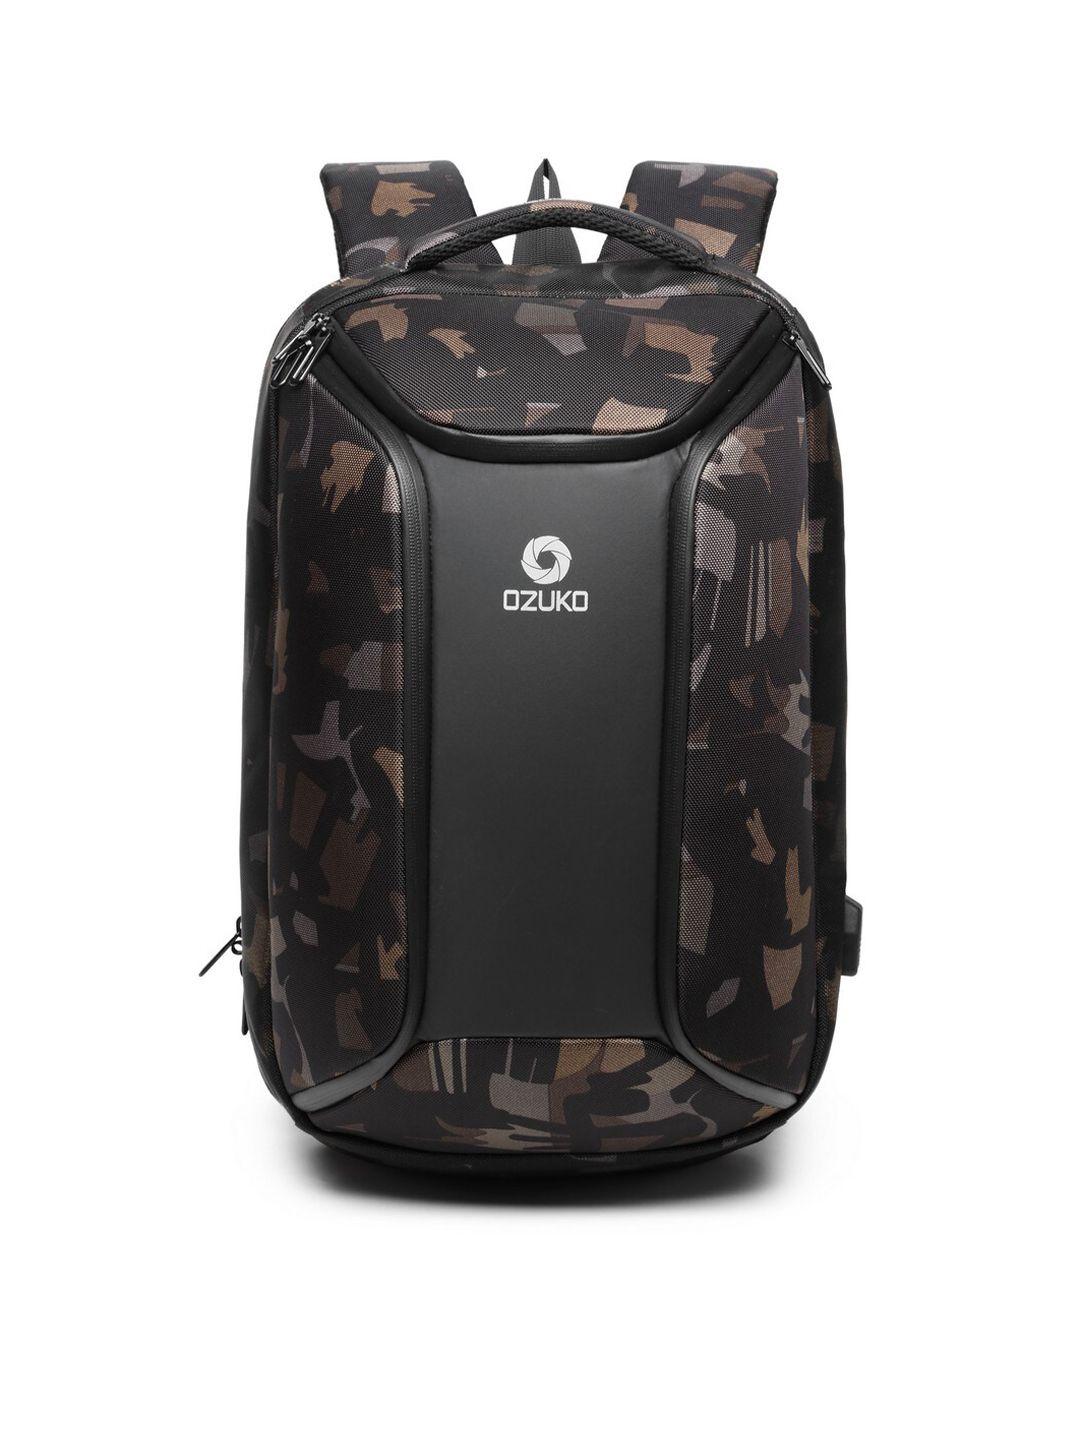 ozuko graphic printed backpack